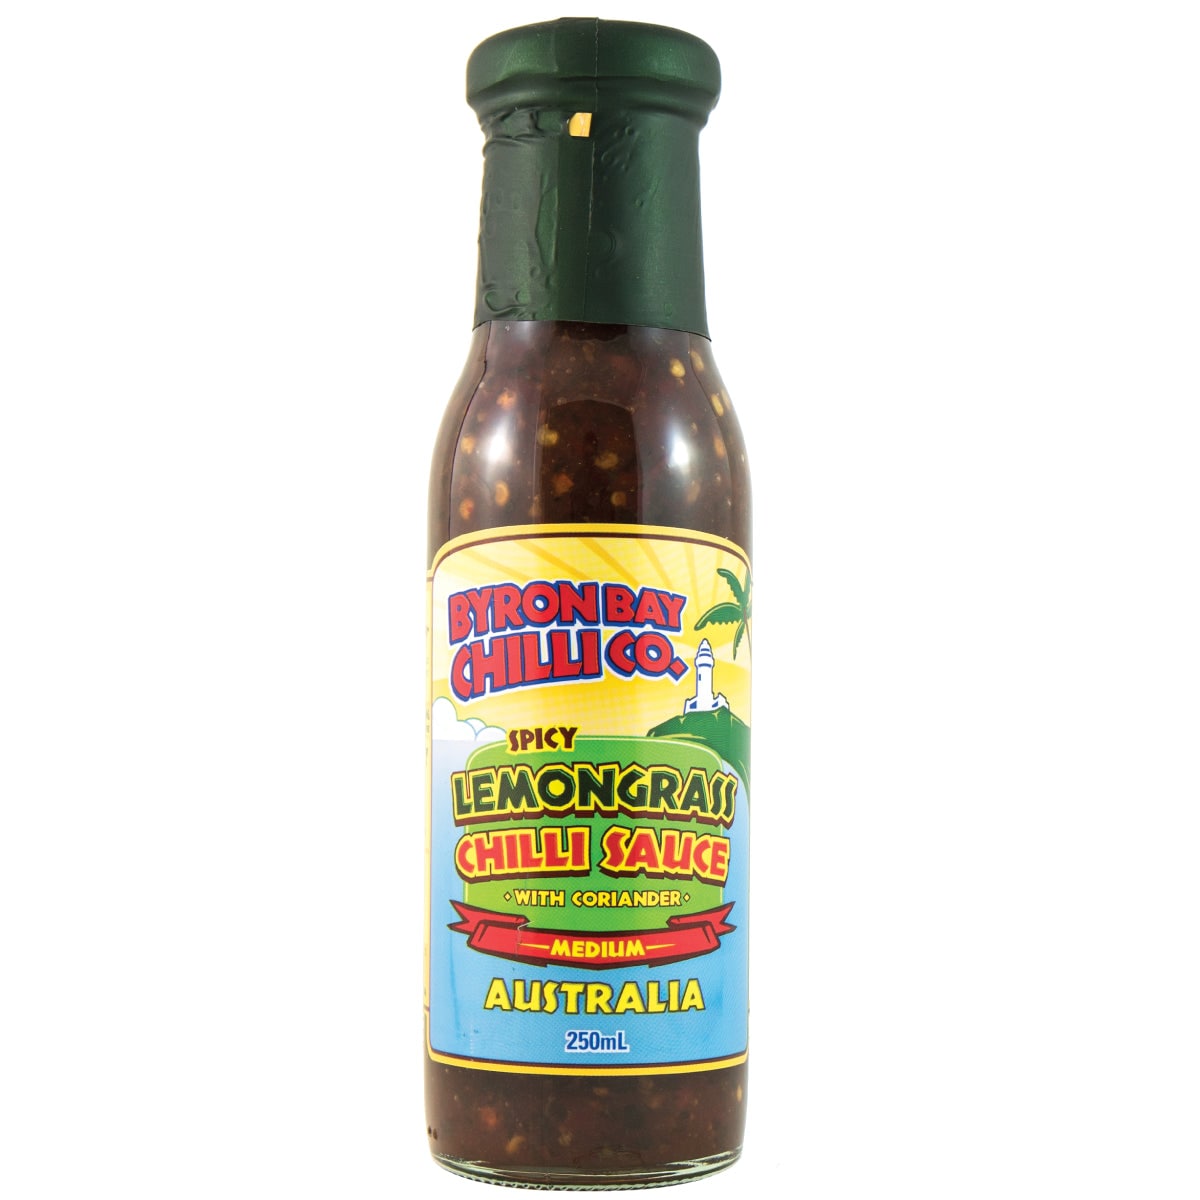 Byron Bay Chilli Spicy Lemongrass Chilli Sauce 250ml